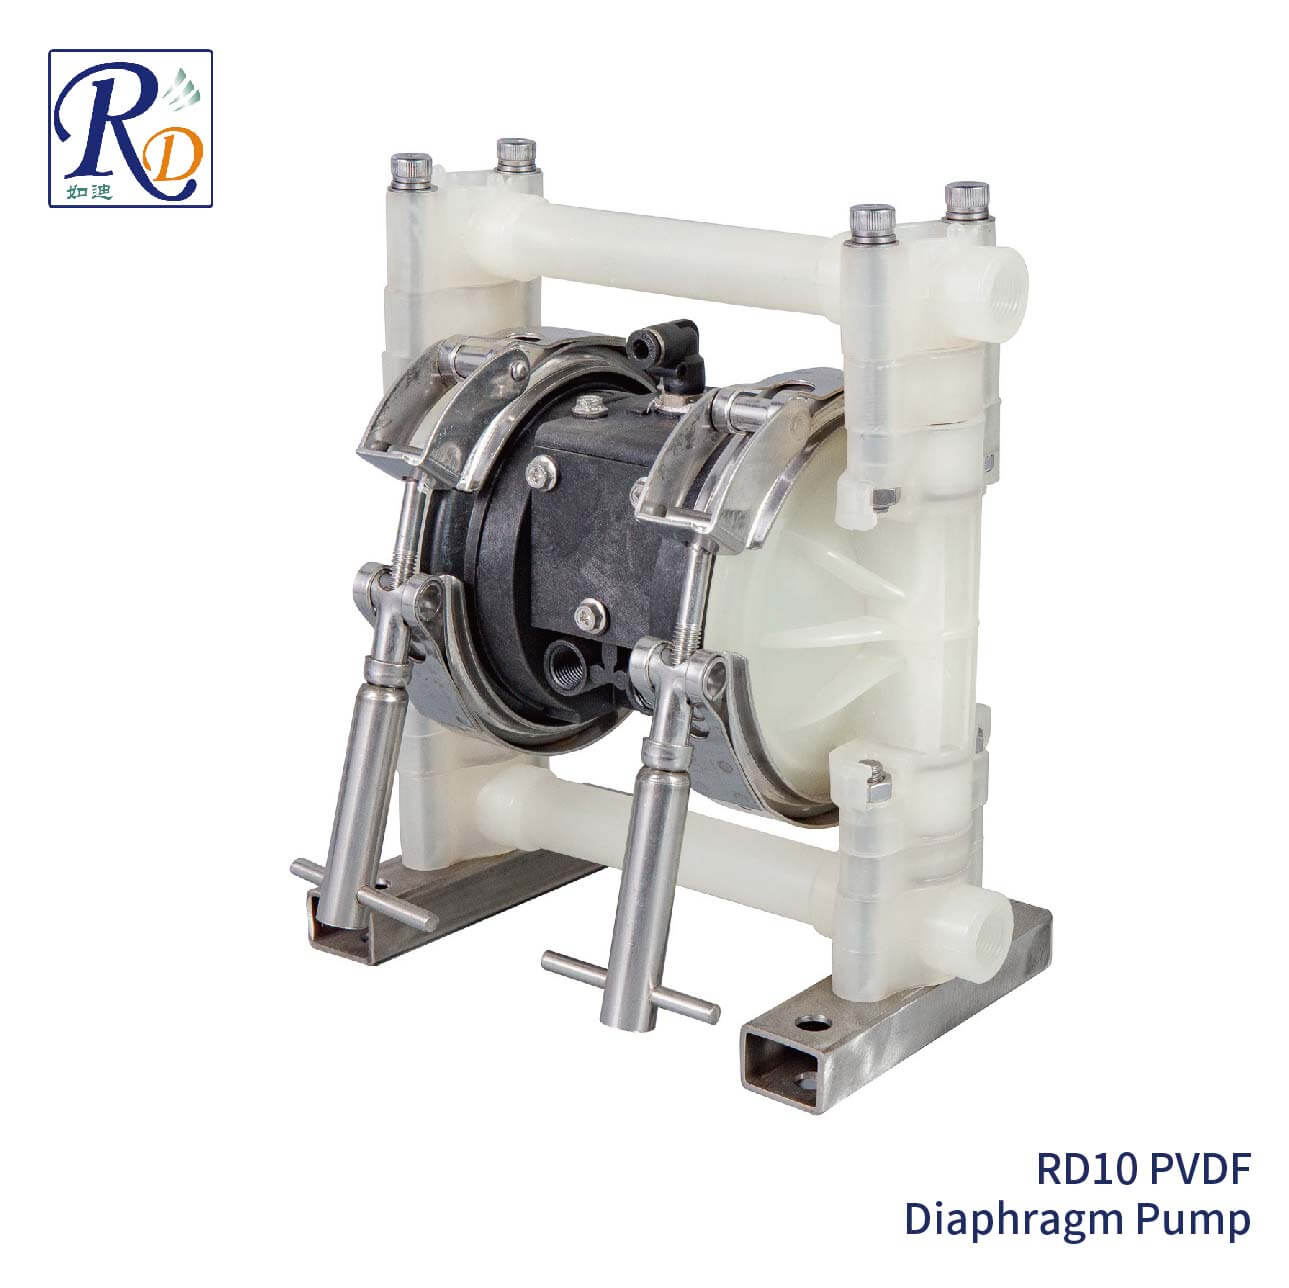 RD10 PVDF Diaphragm Pump